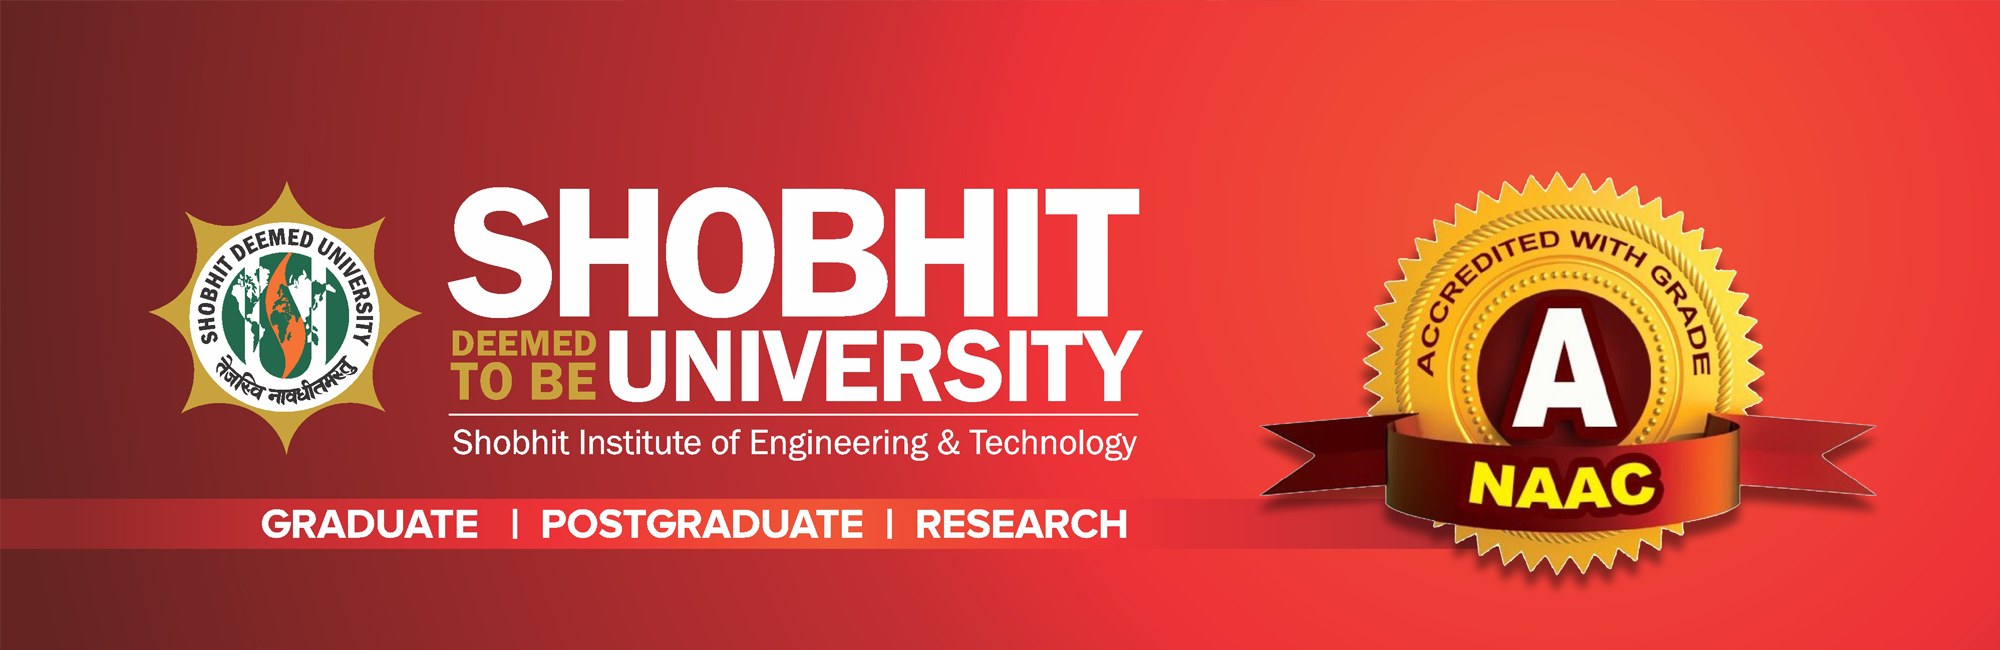 Shobhit University Banner